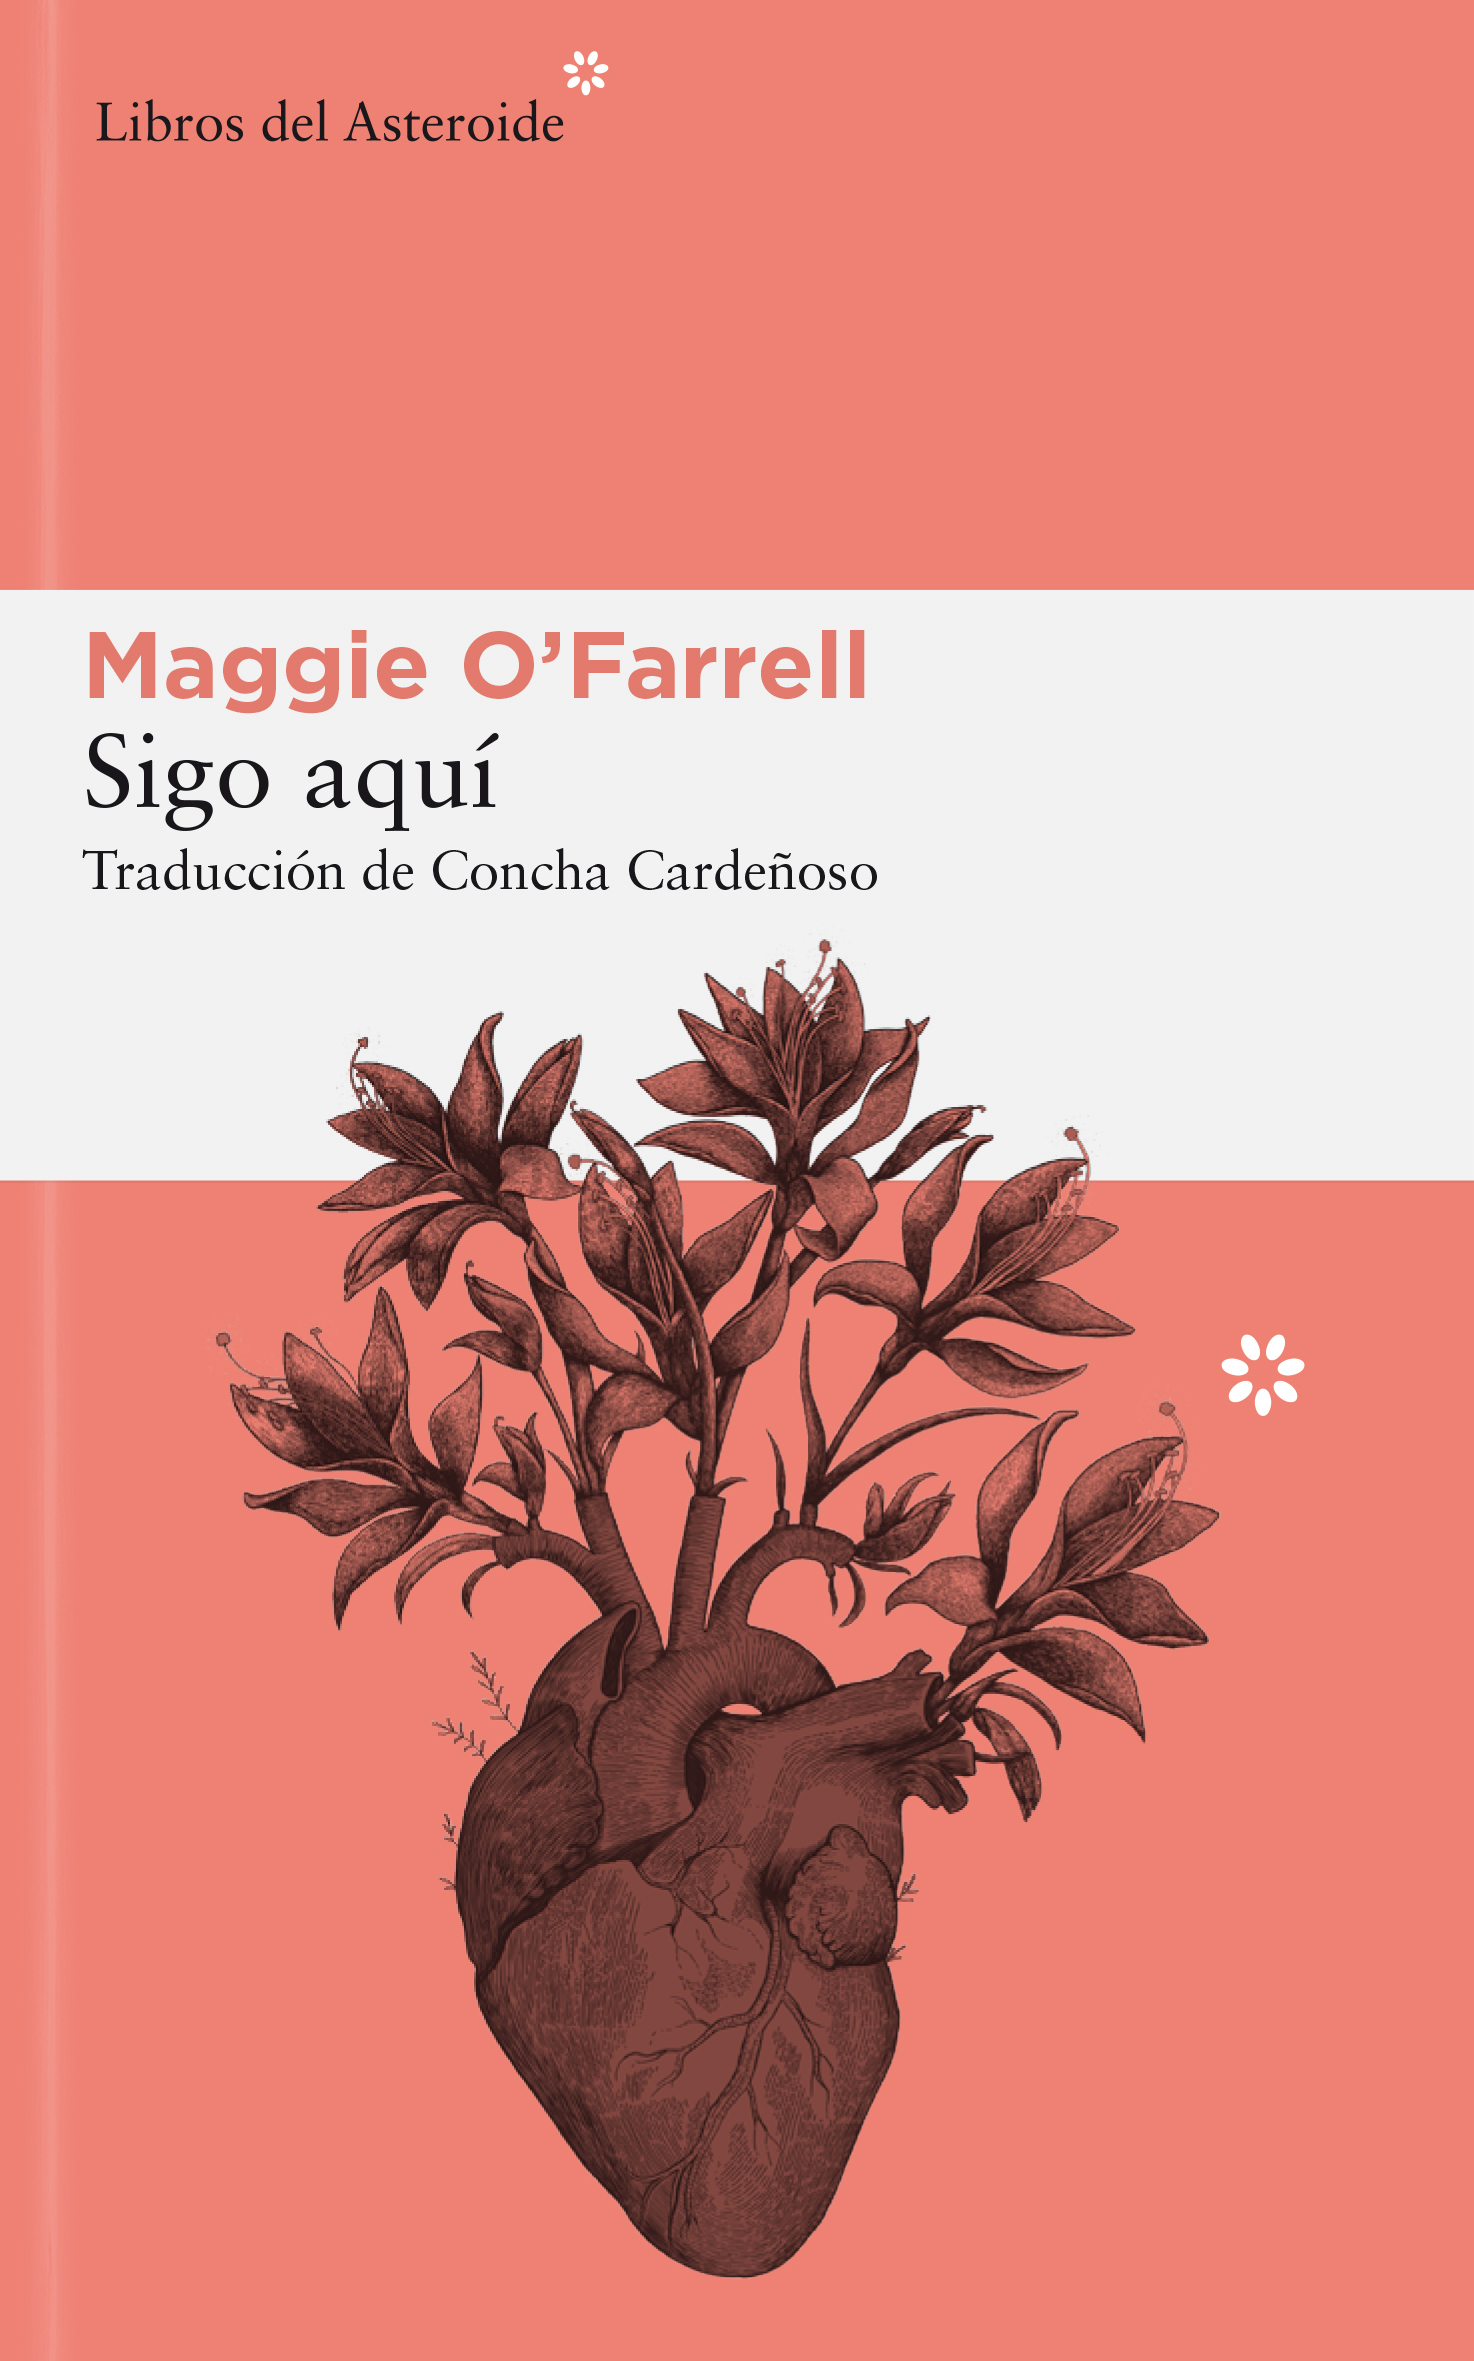 Maggie O'Farrell: Sigo aquí (Spanish language, 2019)